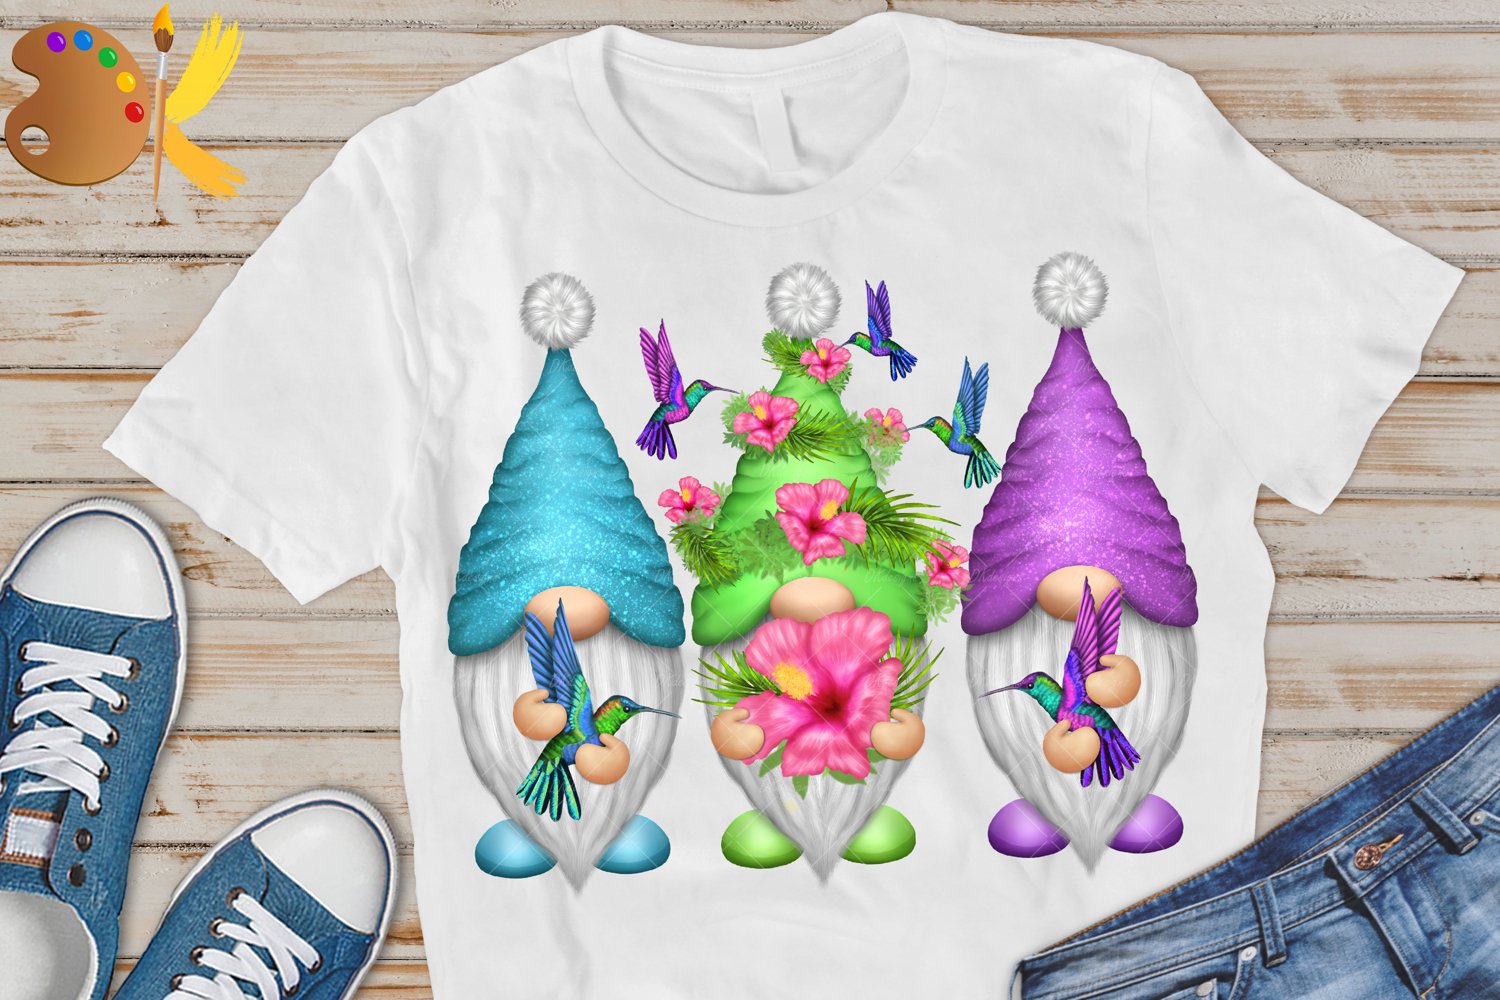 Three colorful gnomes on t-shirt.